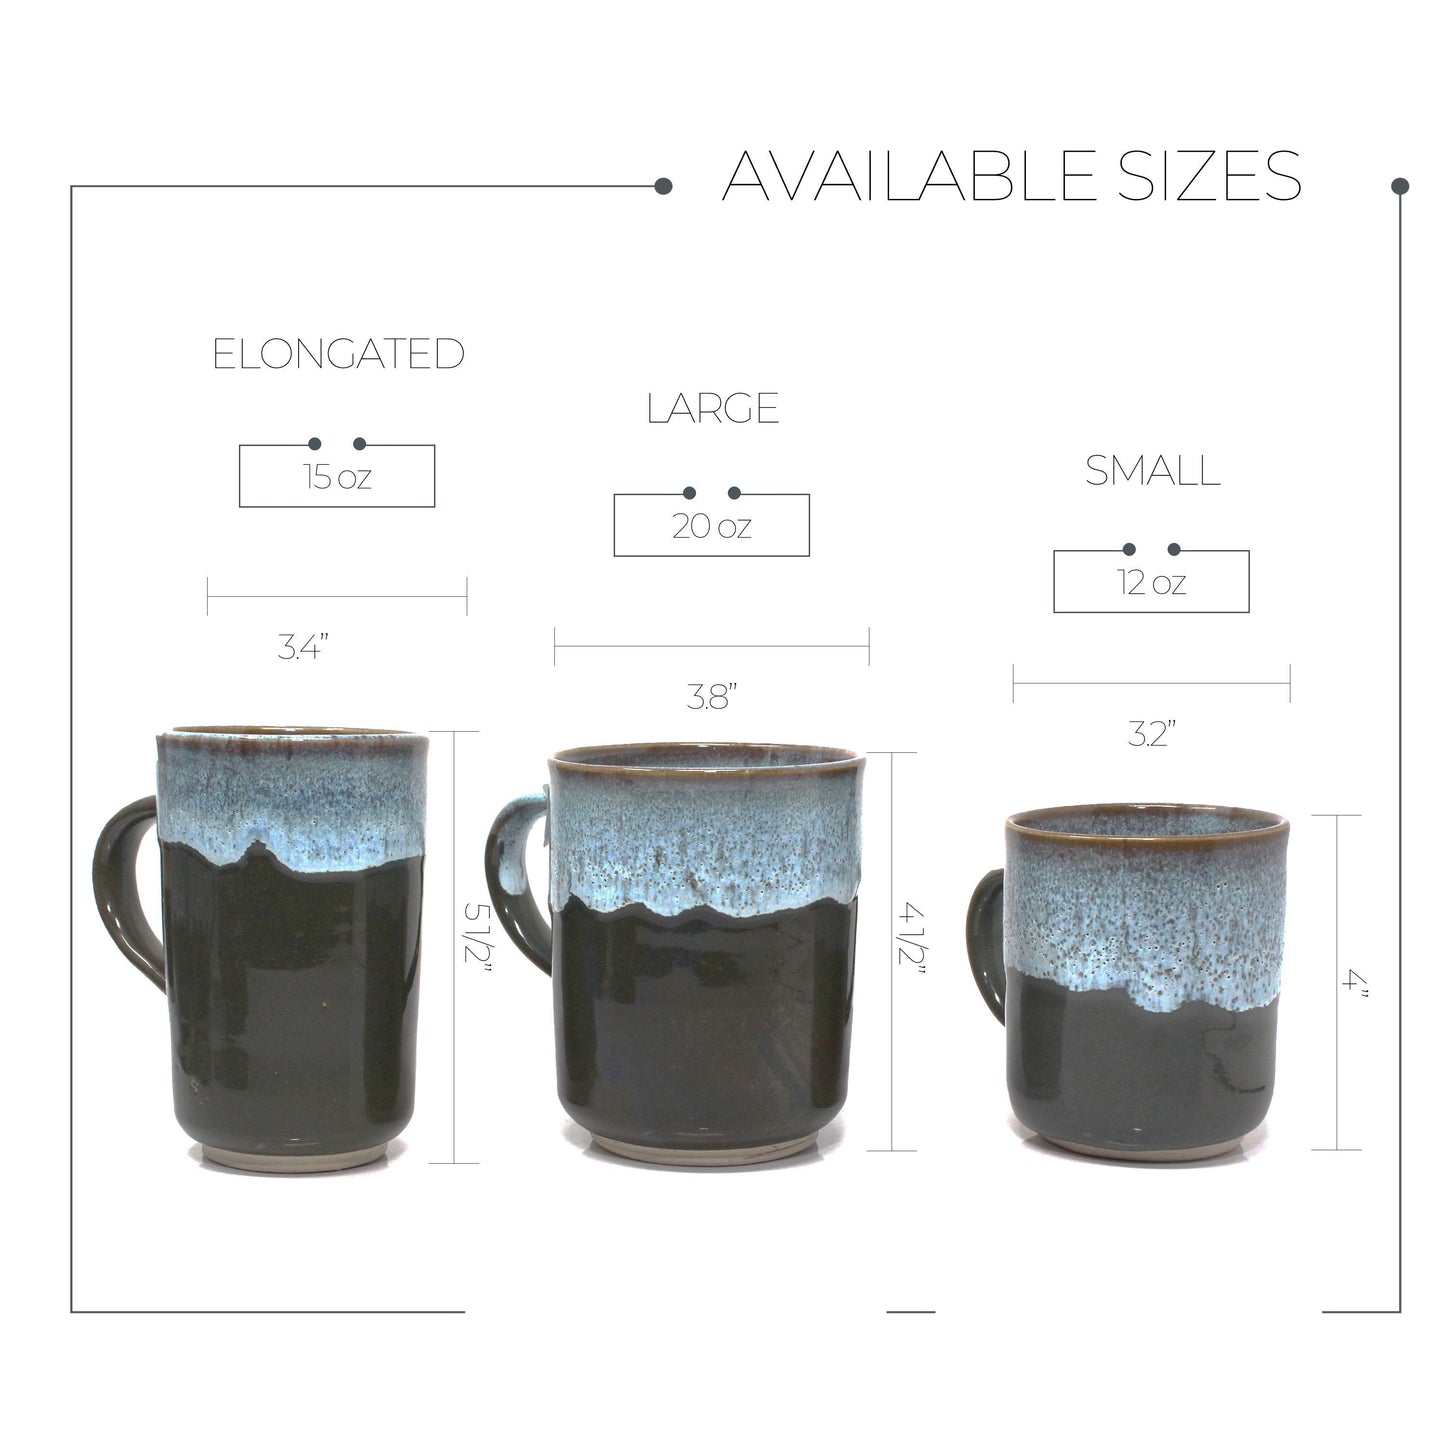 Dark Blue Tricolor Stoneware Mug With Handle, Stoneware Coffee Mug, Pottery Mug Handmade, Handmade Pottery Mug.Modern Mug, Stoneware Tea Mug